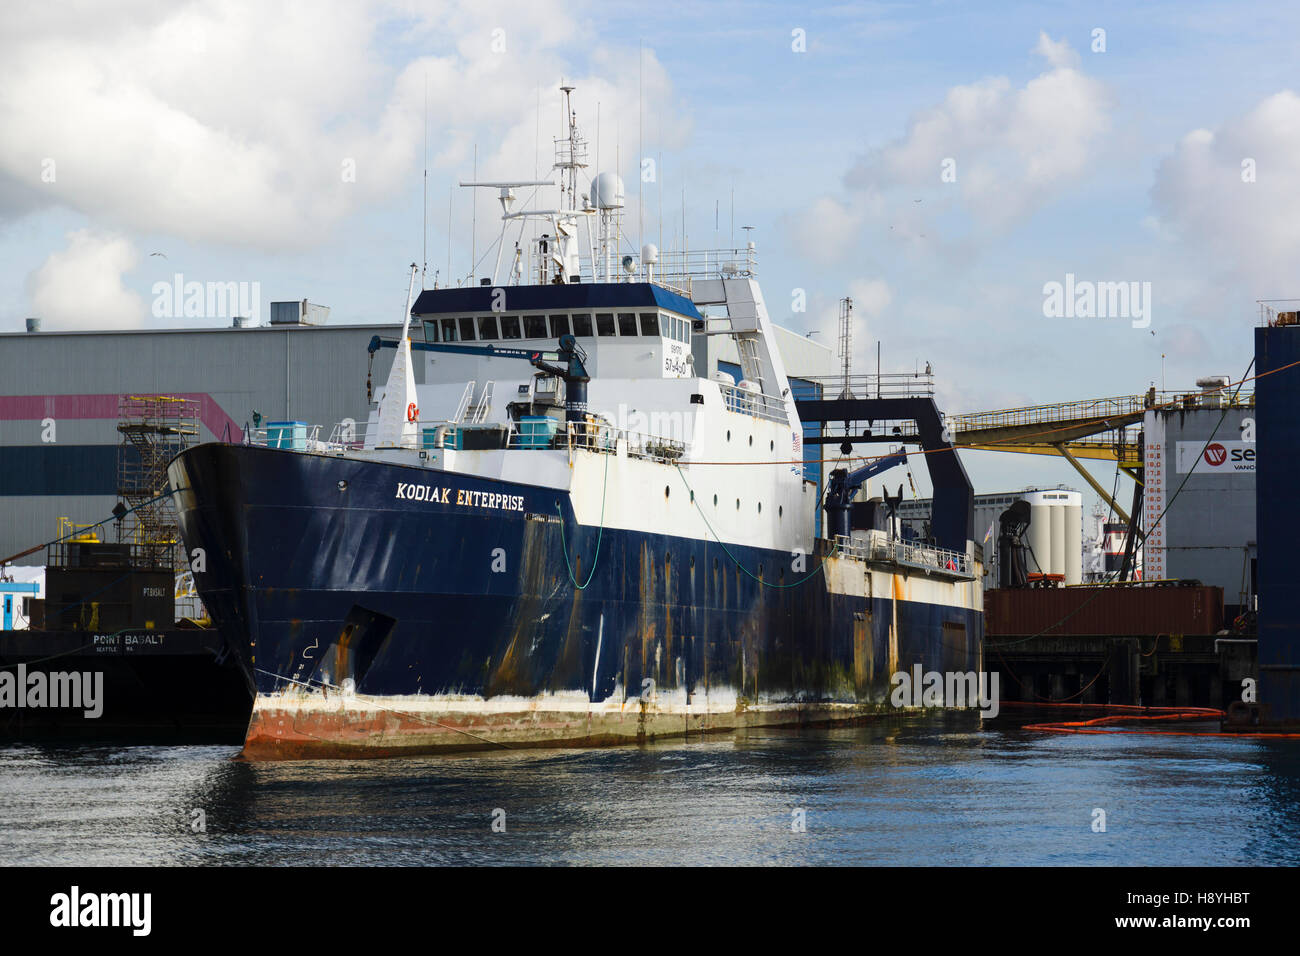 Die Fischerei Trawler "Kodiak Enterprise" Seaspan Werften in North Vancouver, BC, Kanada. Stockfoto